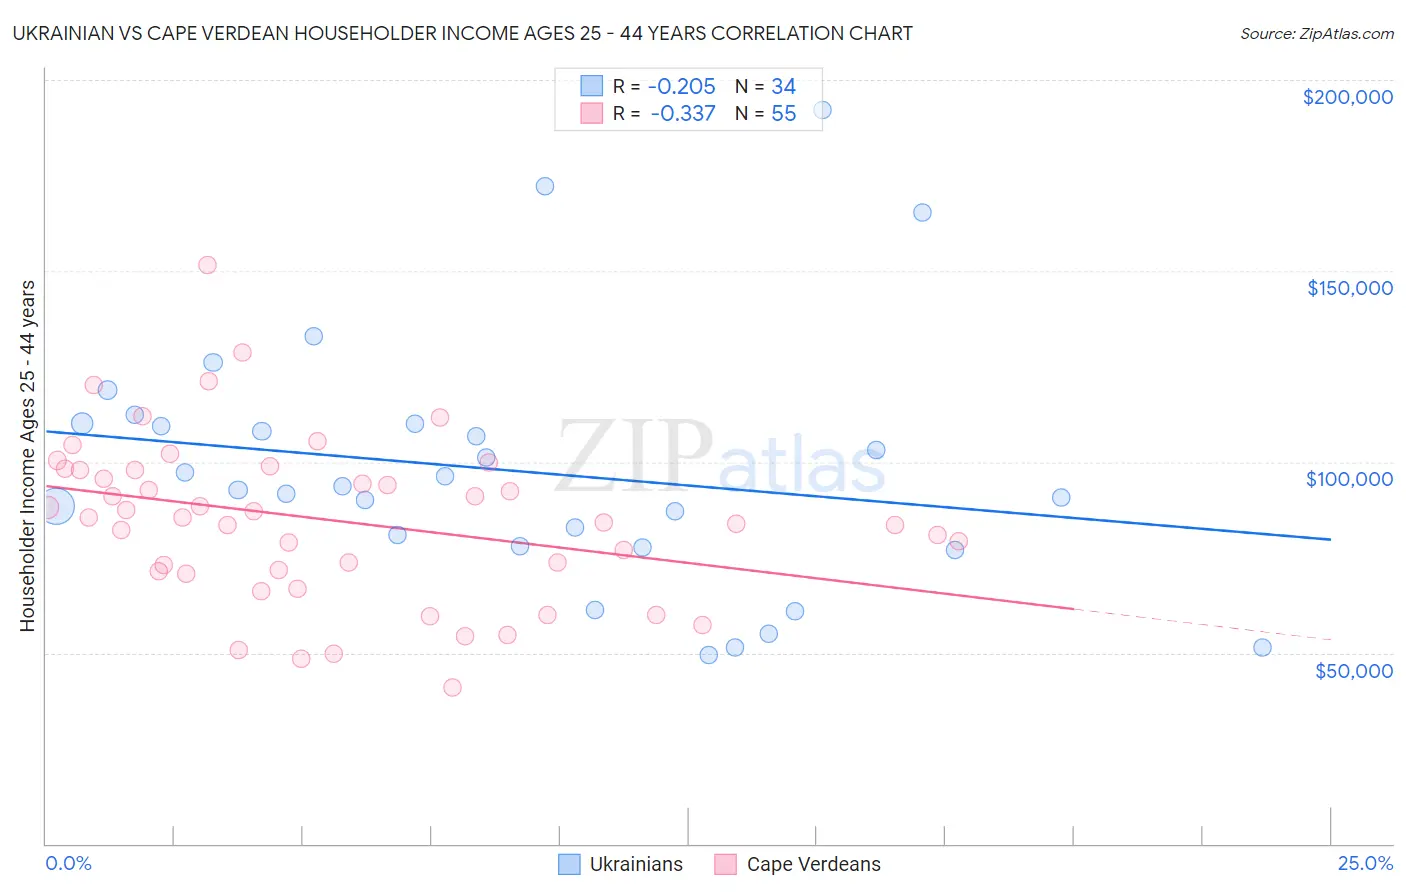 Ukrainian vs Cape Verdean Householder Income Ages 25 - 44 years